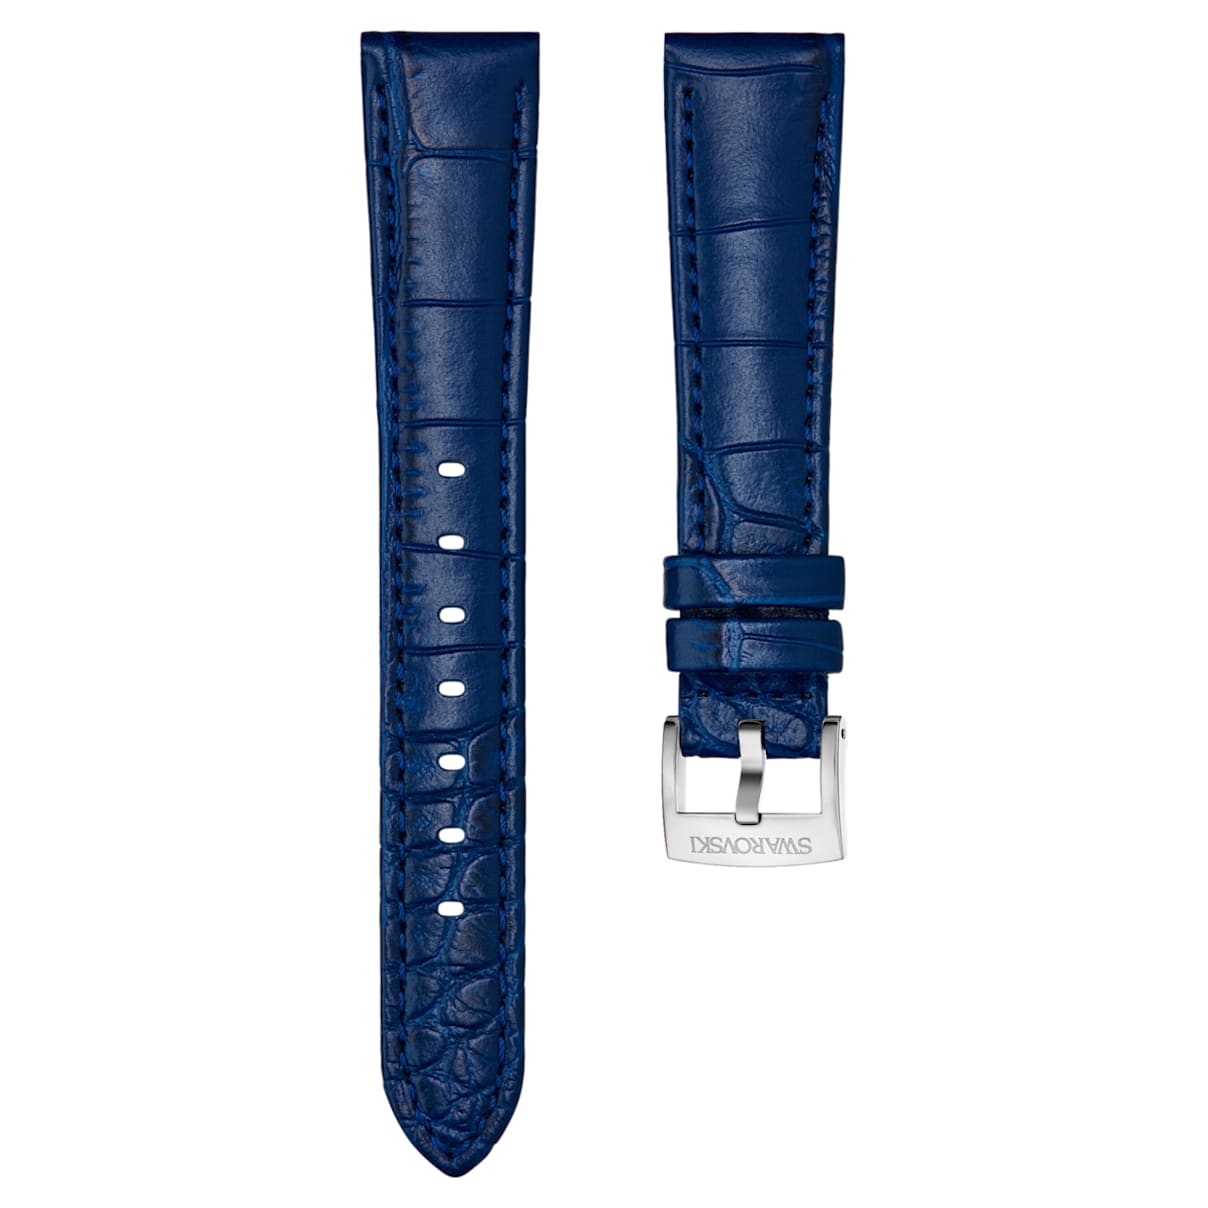 Cinturino per orologio 18mm, pelle con impunture, blu, acciaio inossidabile